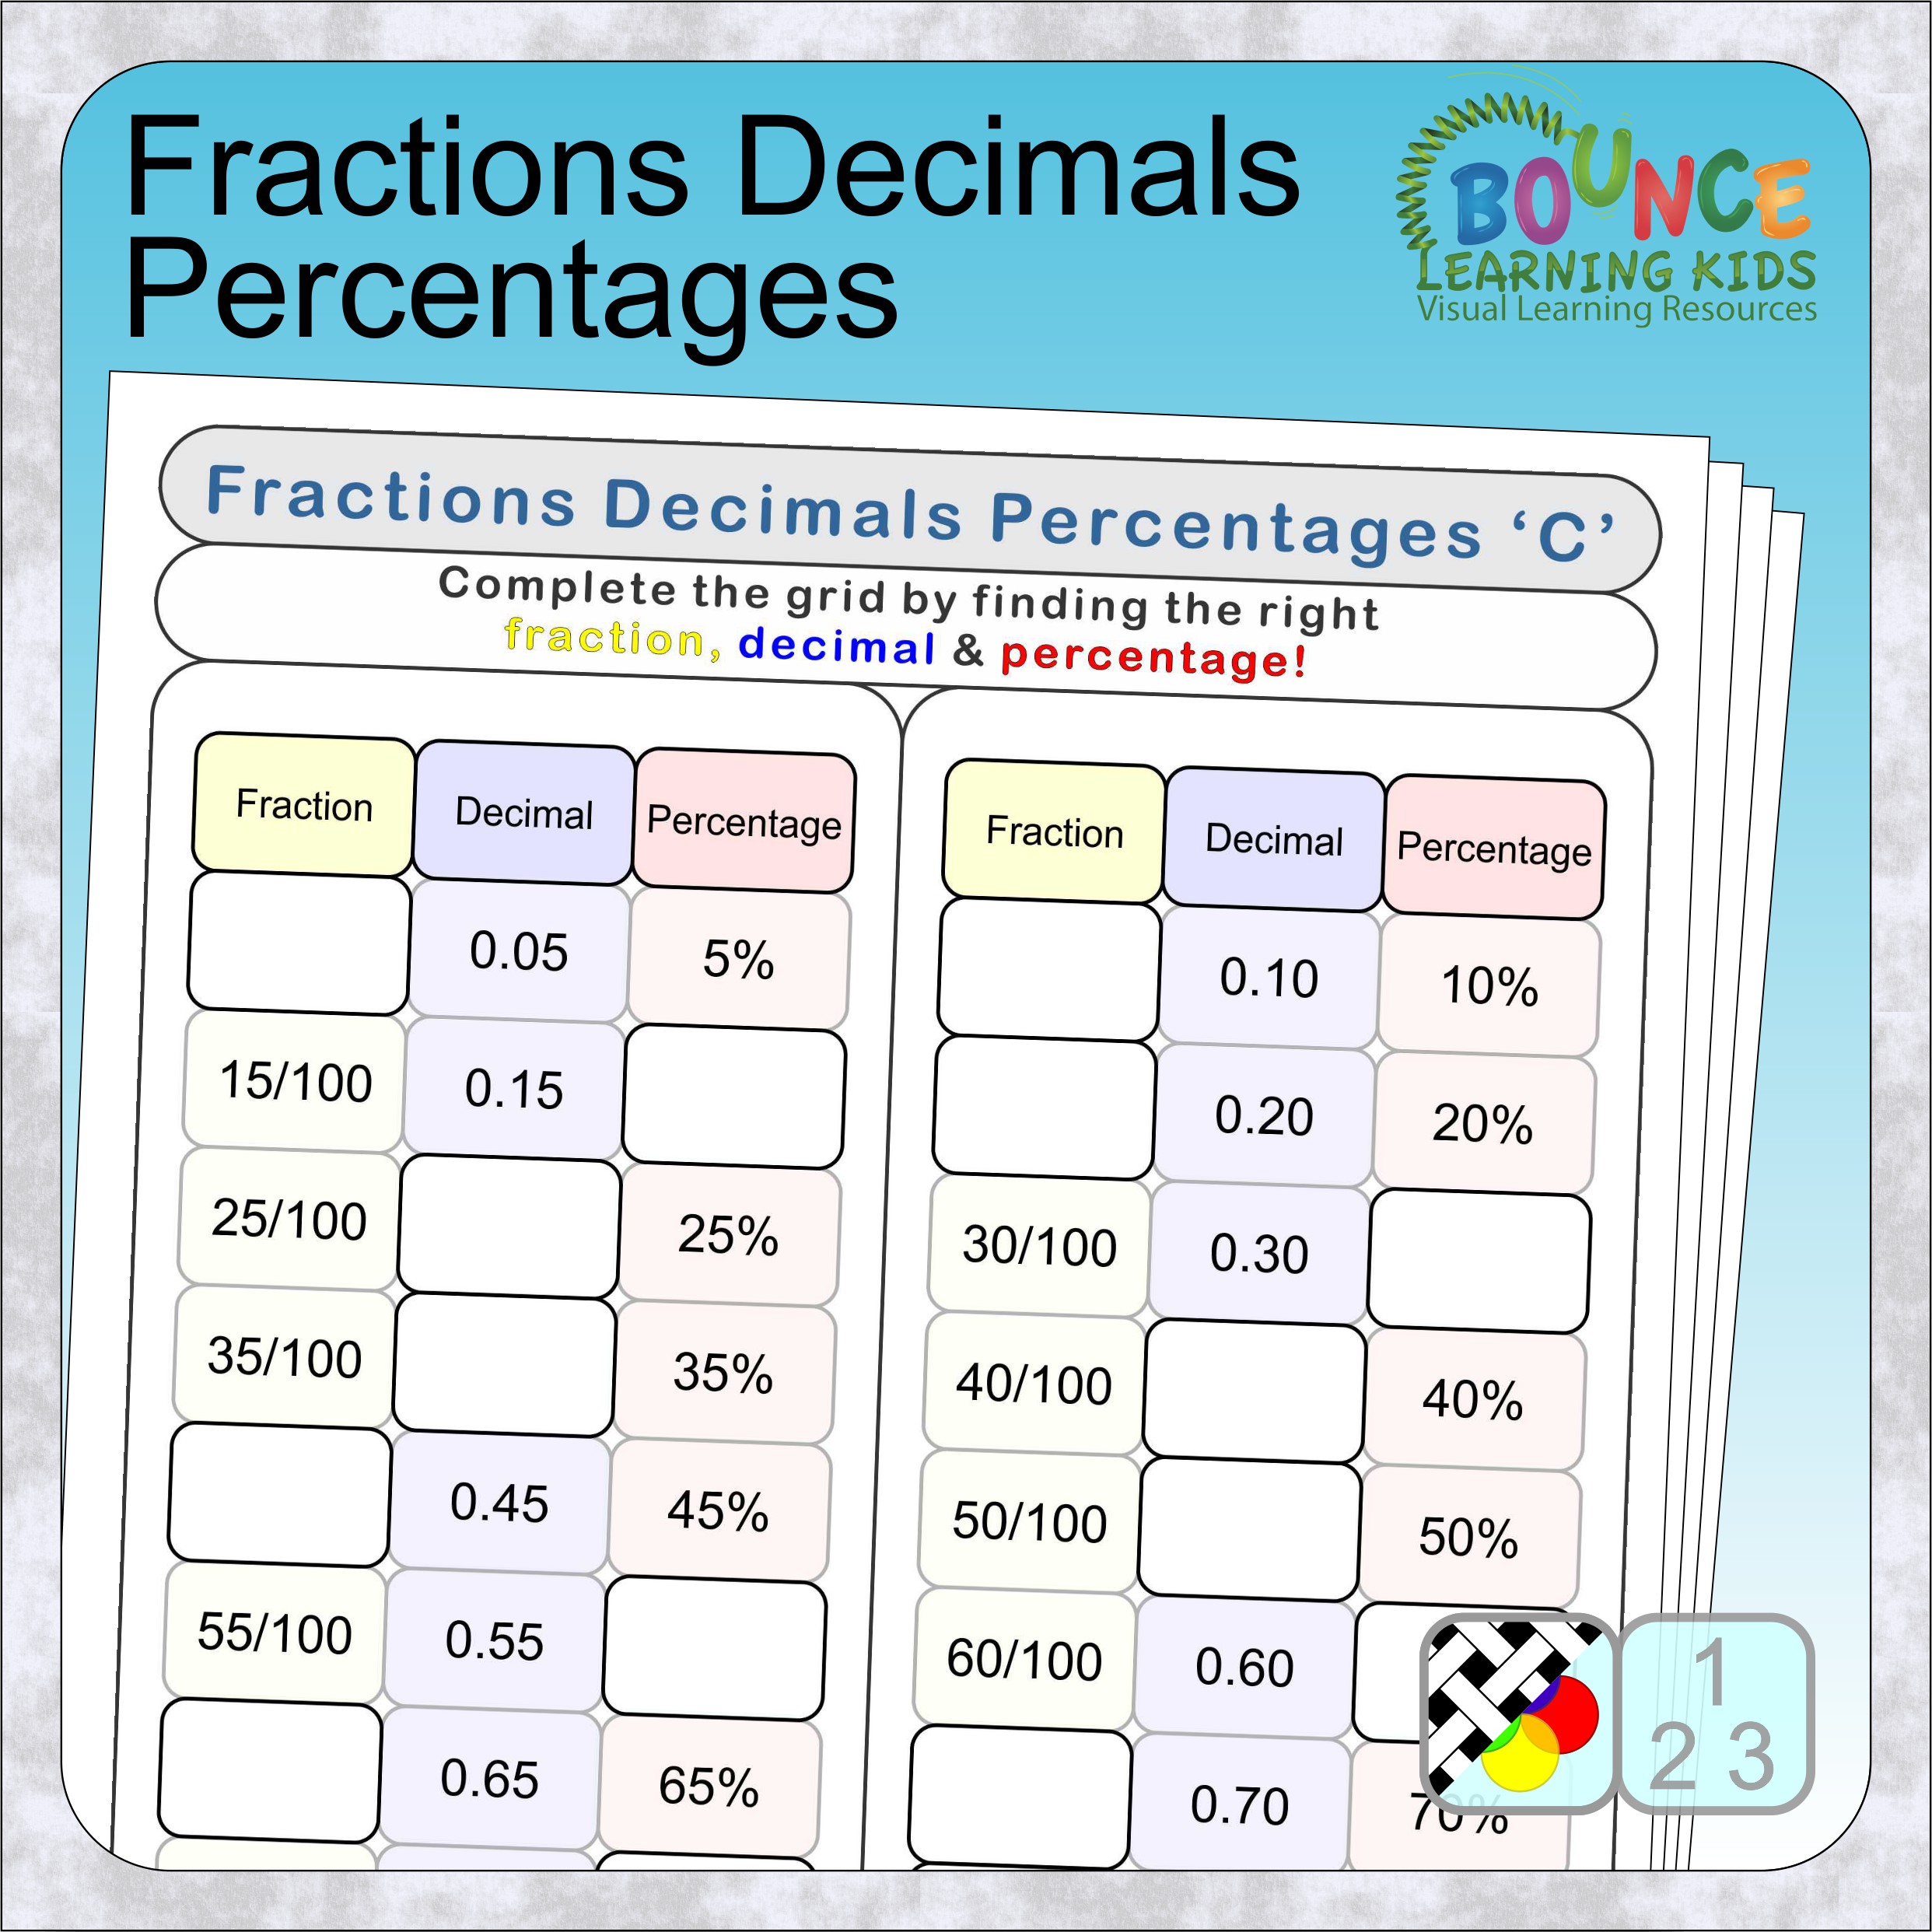 10 Fun Fractions Decimals Percentages Worksheets To Download